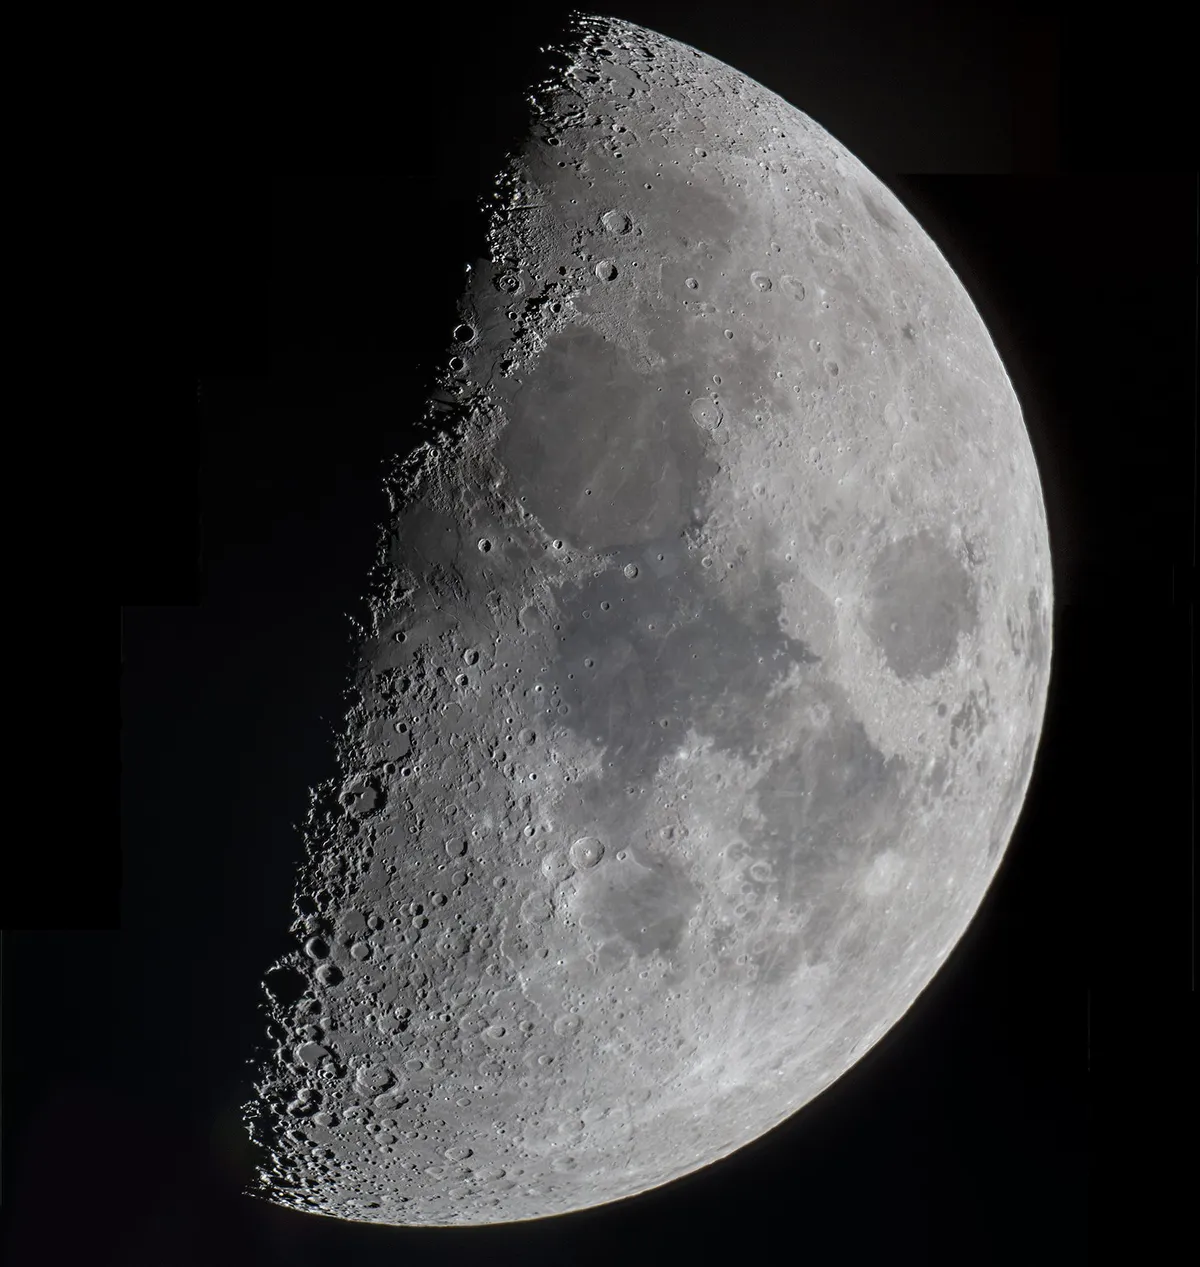 The Moon 15 Image Mosaic by John Short, Whitburn, Tyne and Wear, Uk. Equipment: Canon 70D, Celestron 8SE, 2x Barlow, CGEM mount